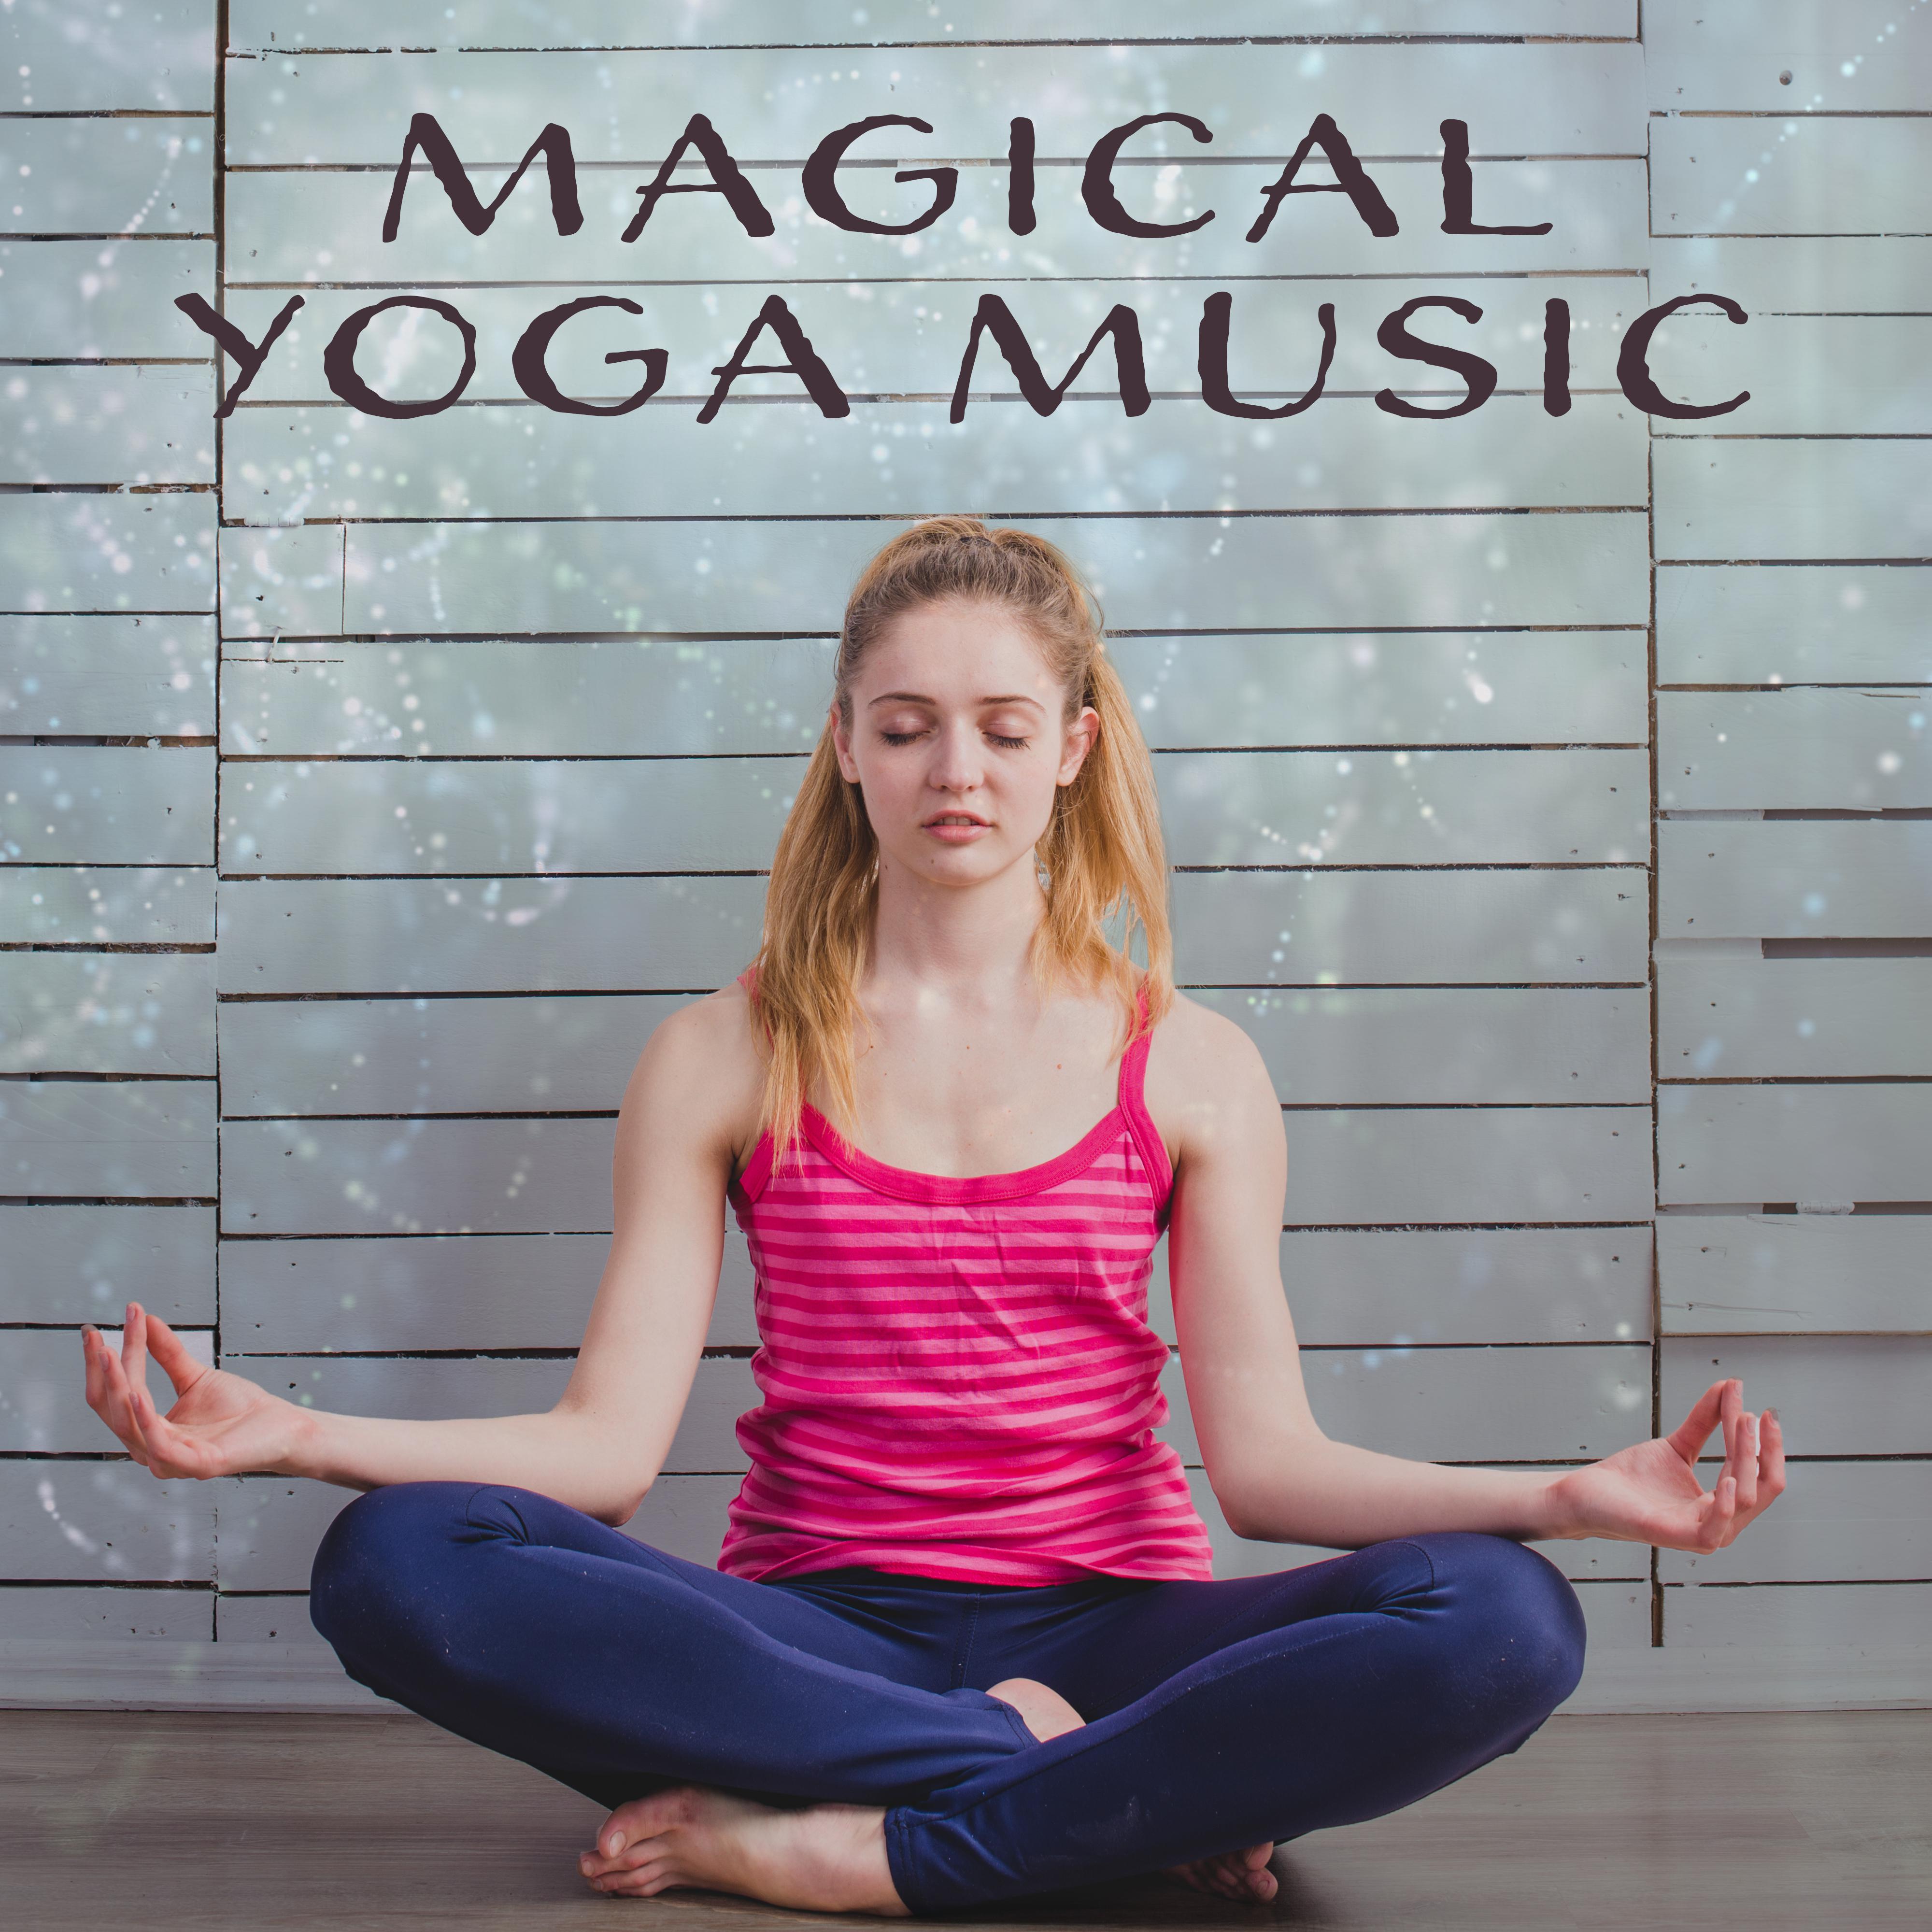 Magical Yoga Music